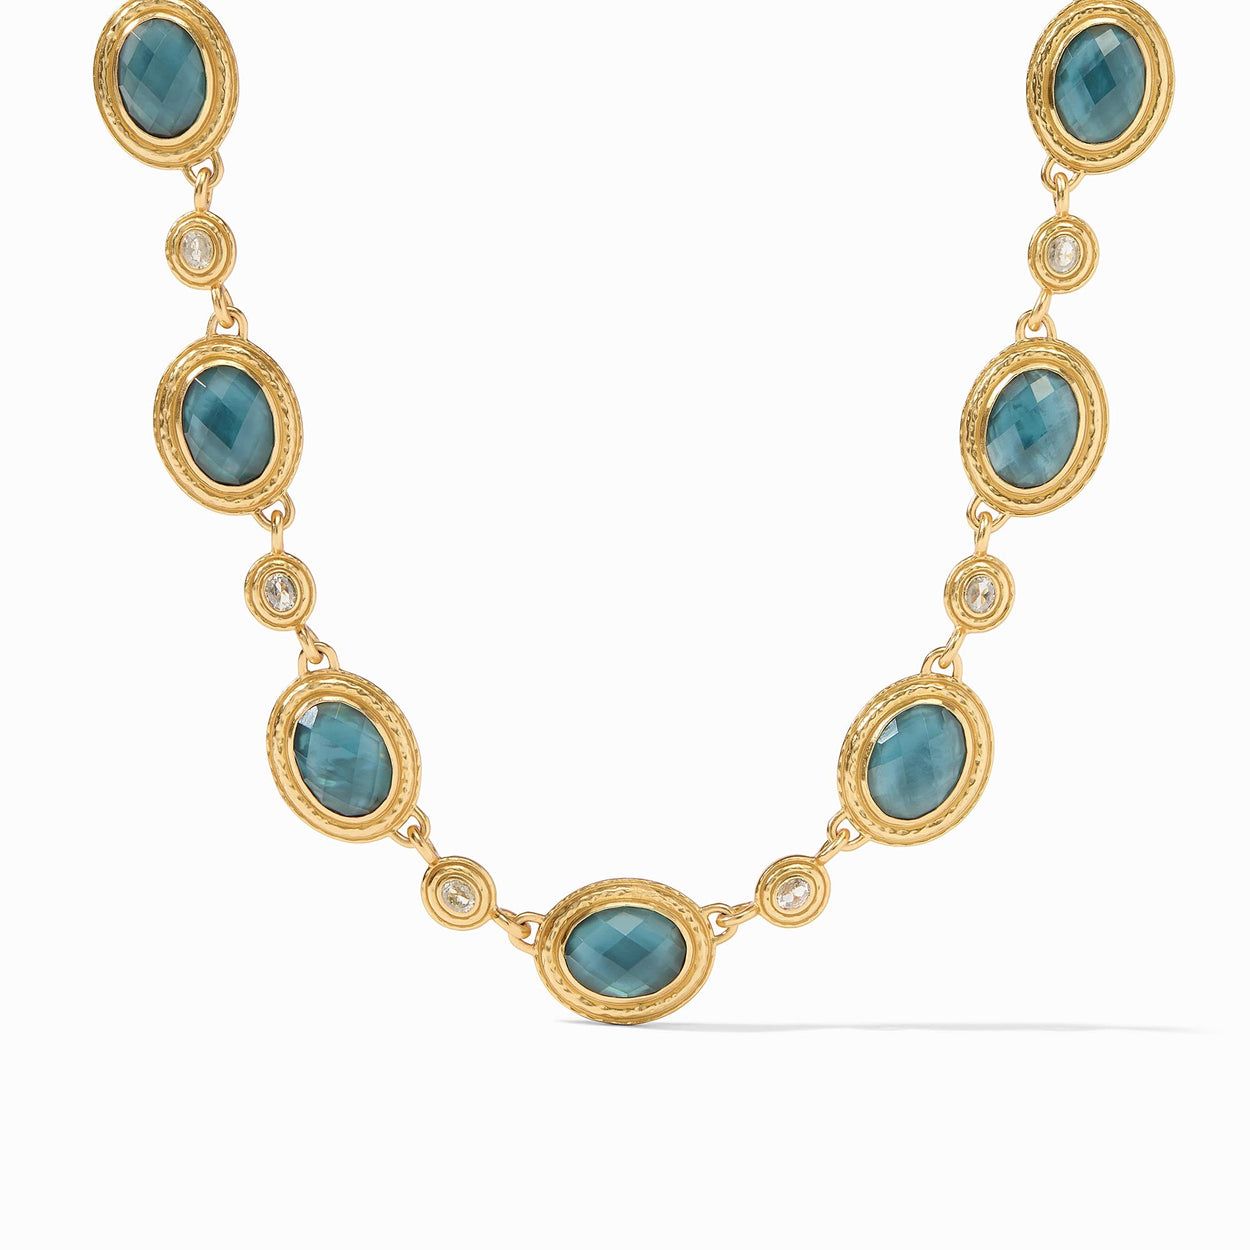 JULIE VOS Tudor Stone Necklace Iridescent Peacock Blue